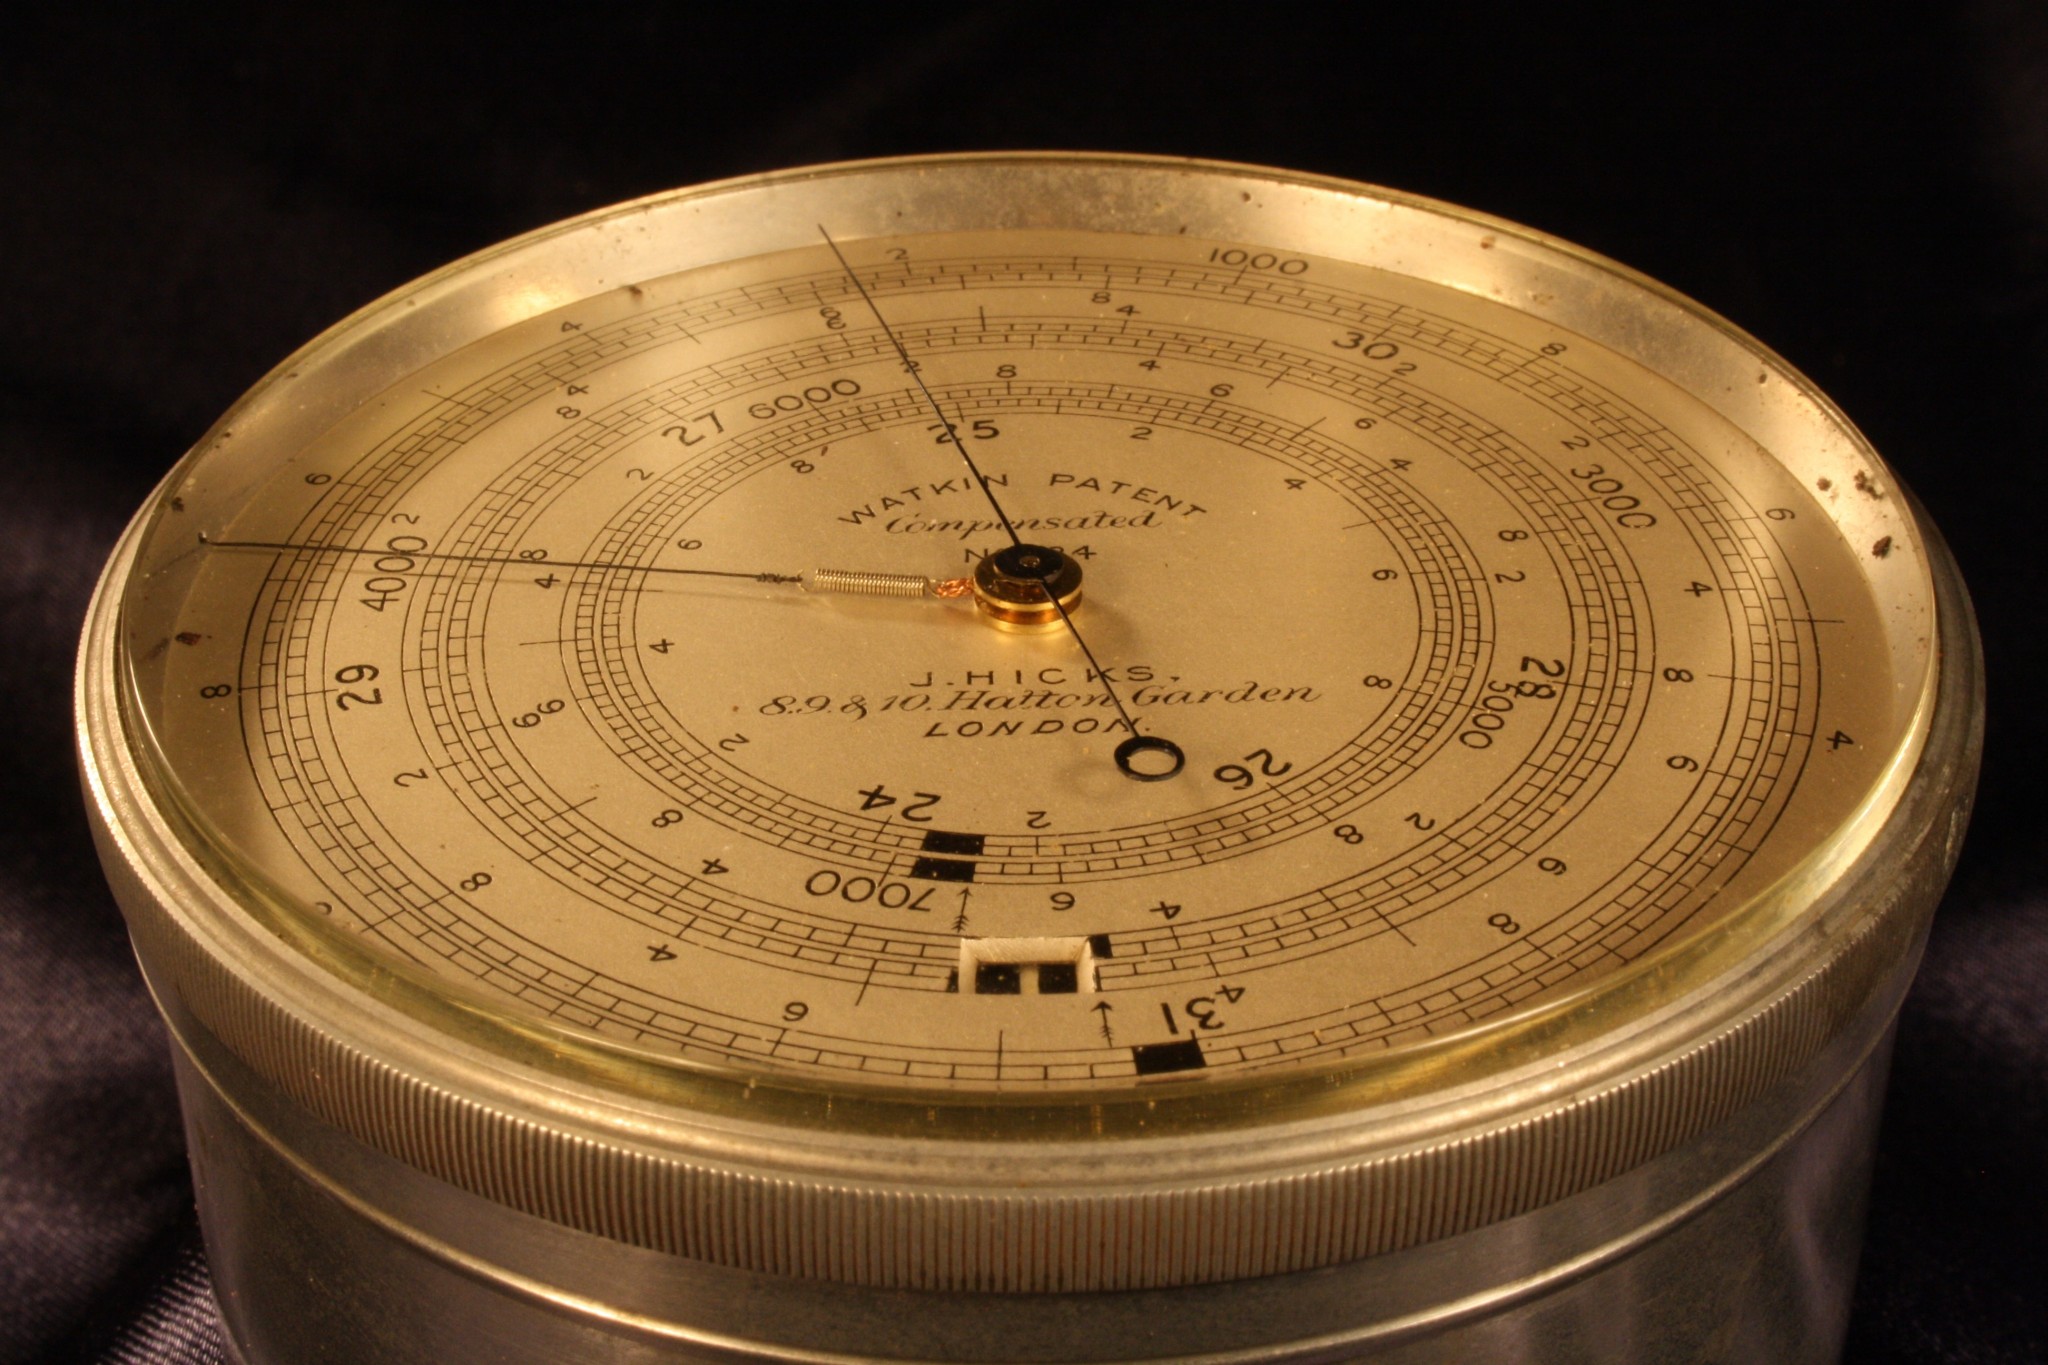 Watkin Patent Altimeter by Hicks No 934